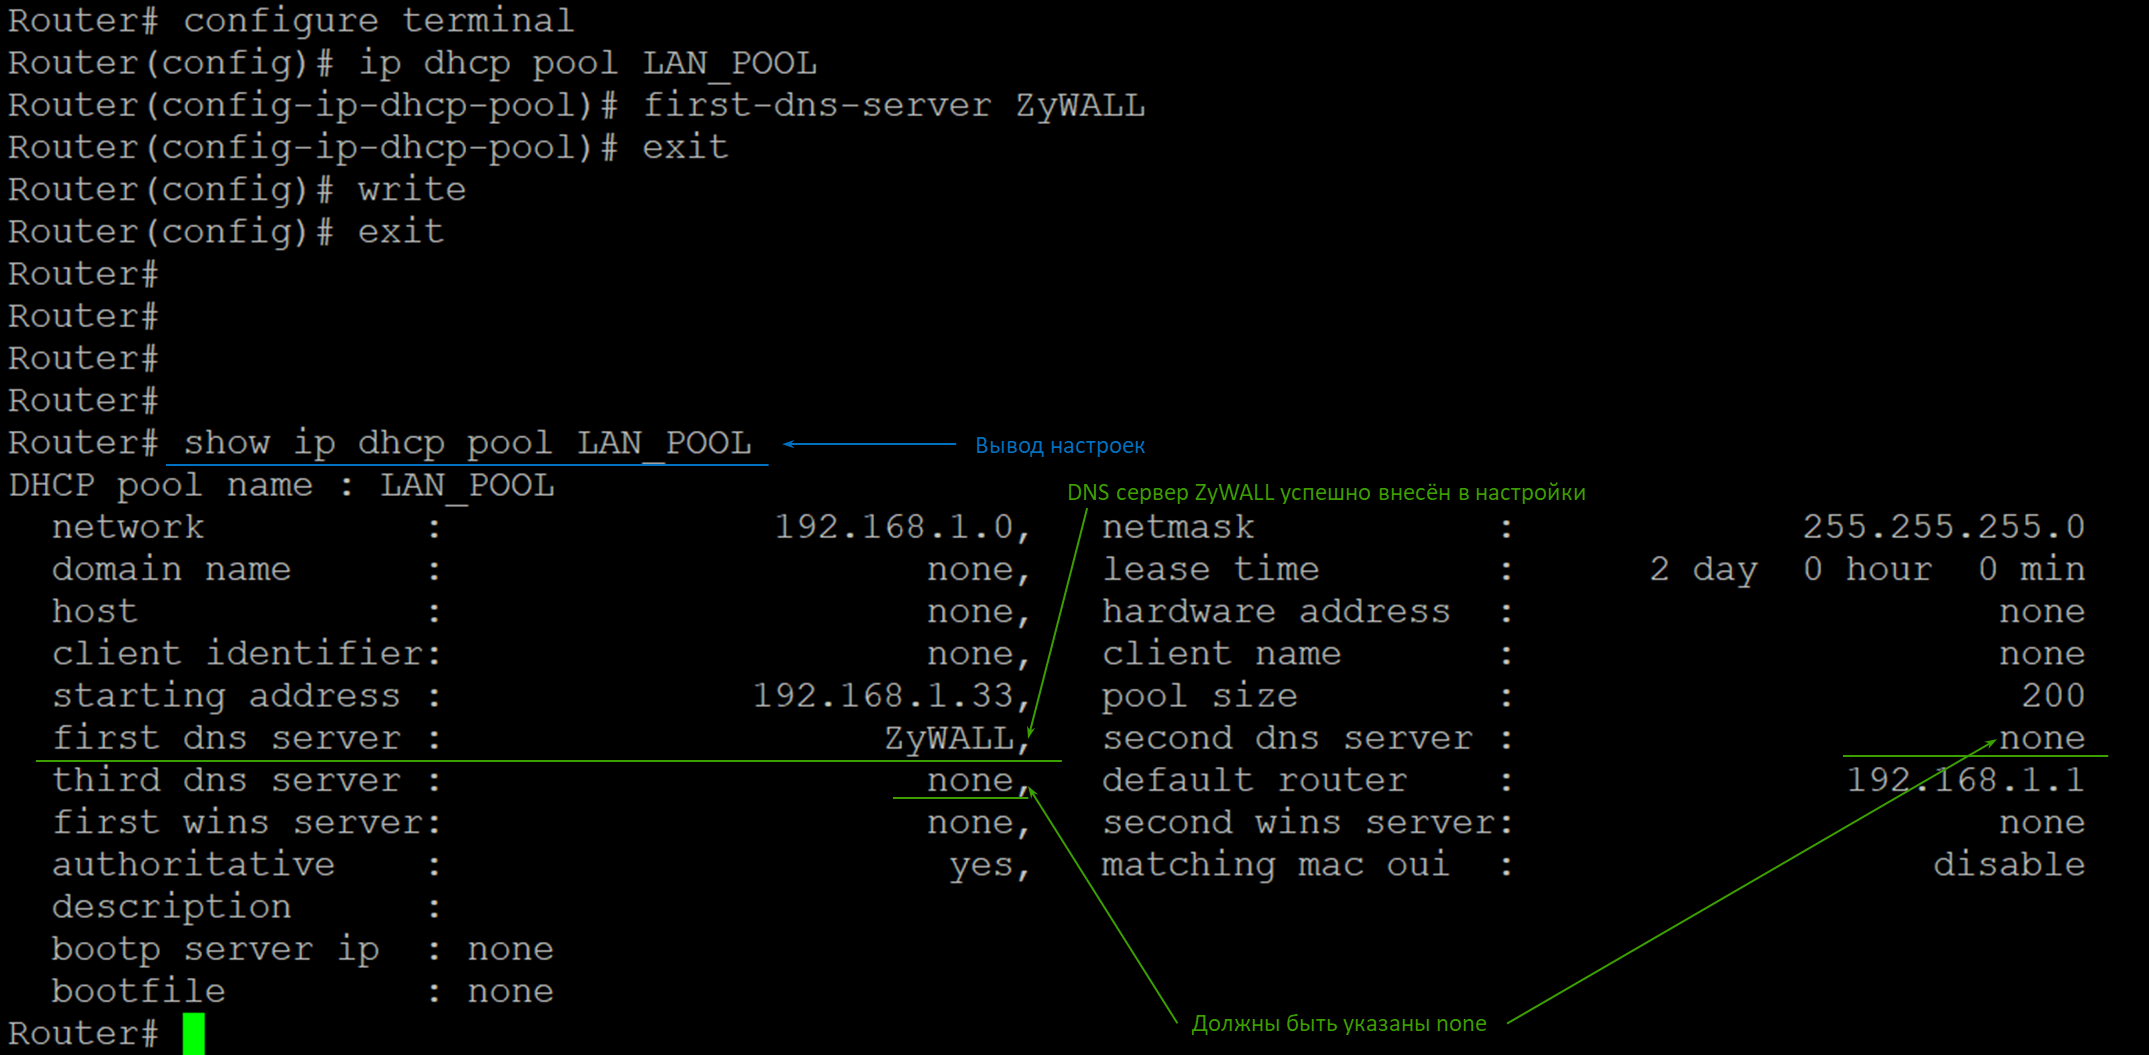 Рис.9 - Установка DNS сервера "ZyWALL" первым DNS сервером (first dns server).